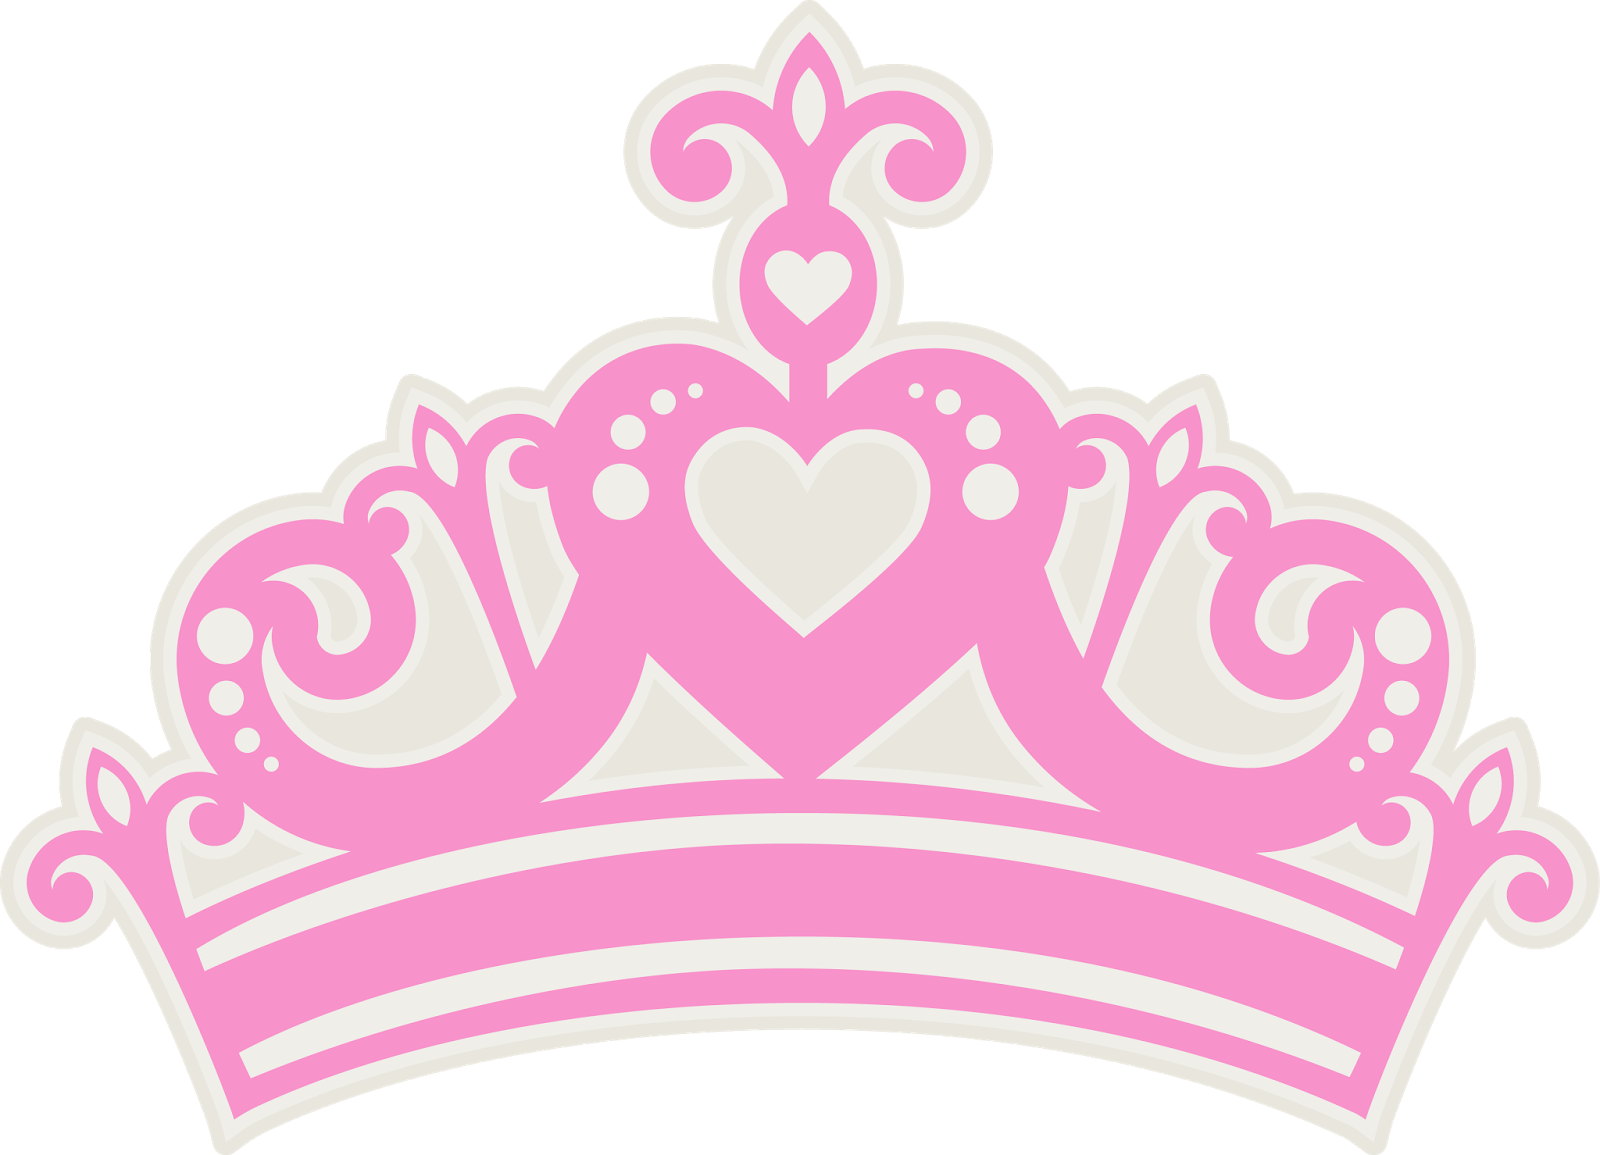 PNG Princess Crown Transparent Princess Crown.PNG Images. | PlusPNG